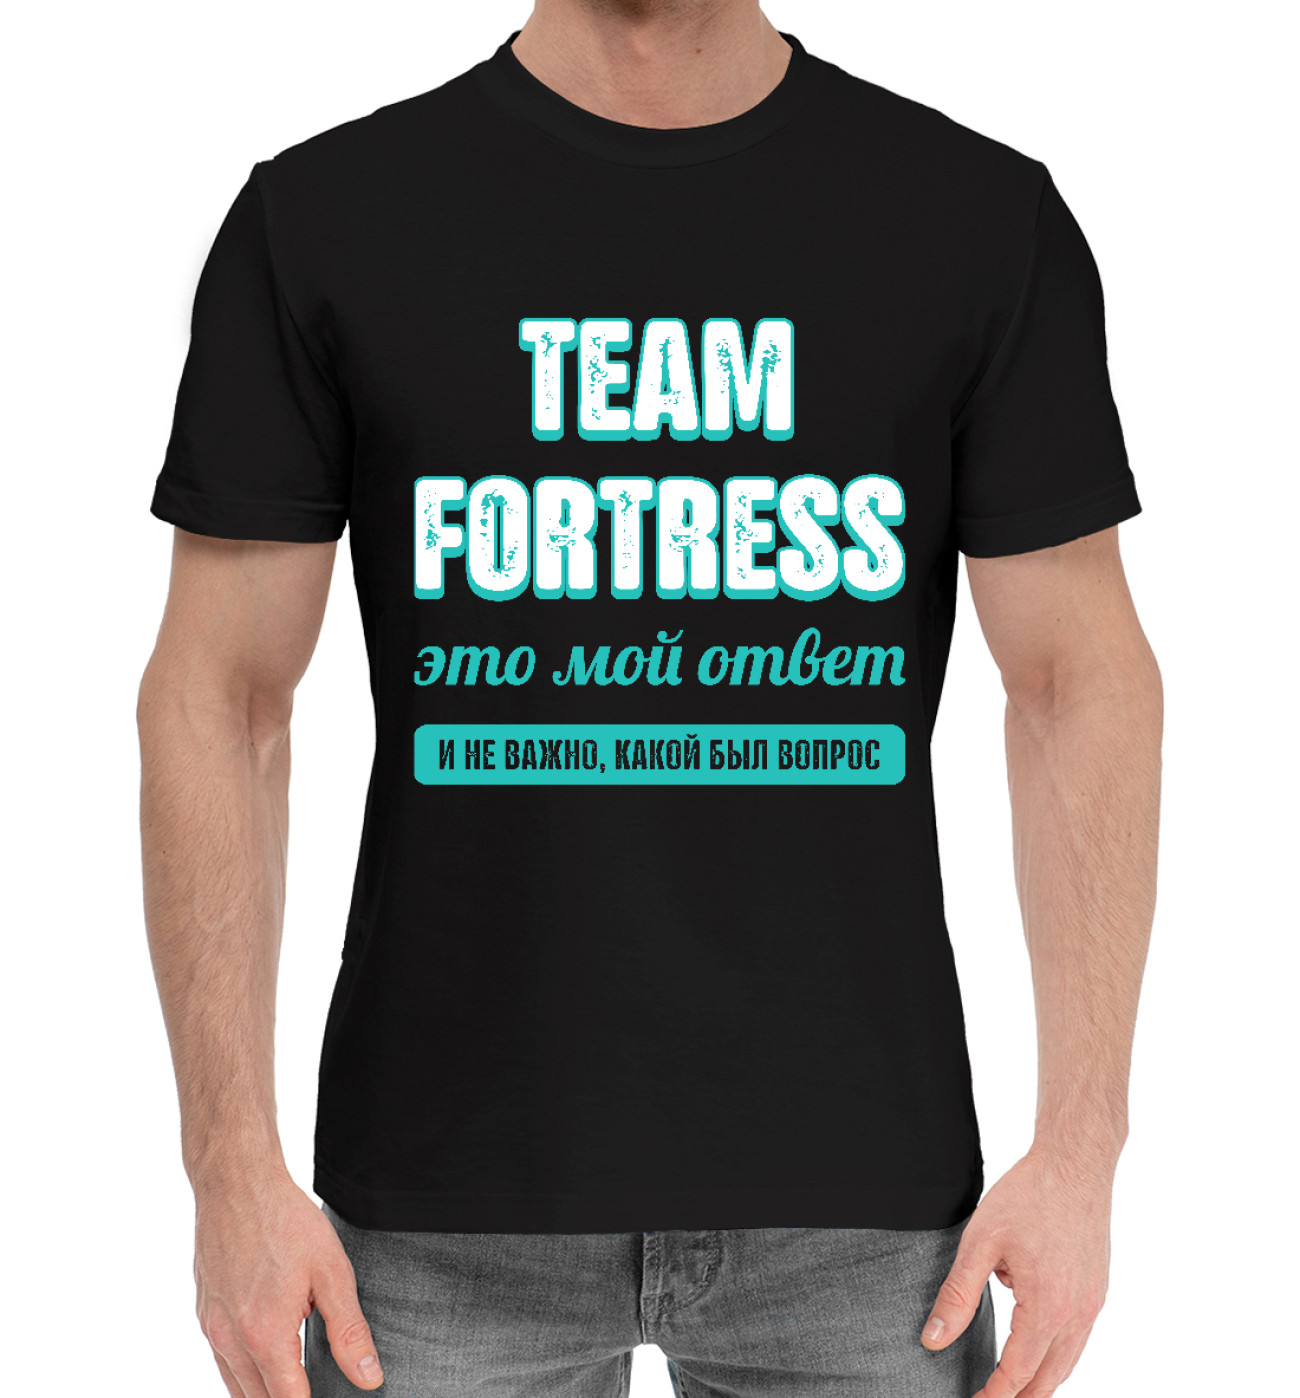 Мужская Хлопковая футболка Team Fortress Ответ, артикул: GMR-455378-hfu-2